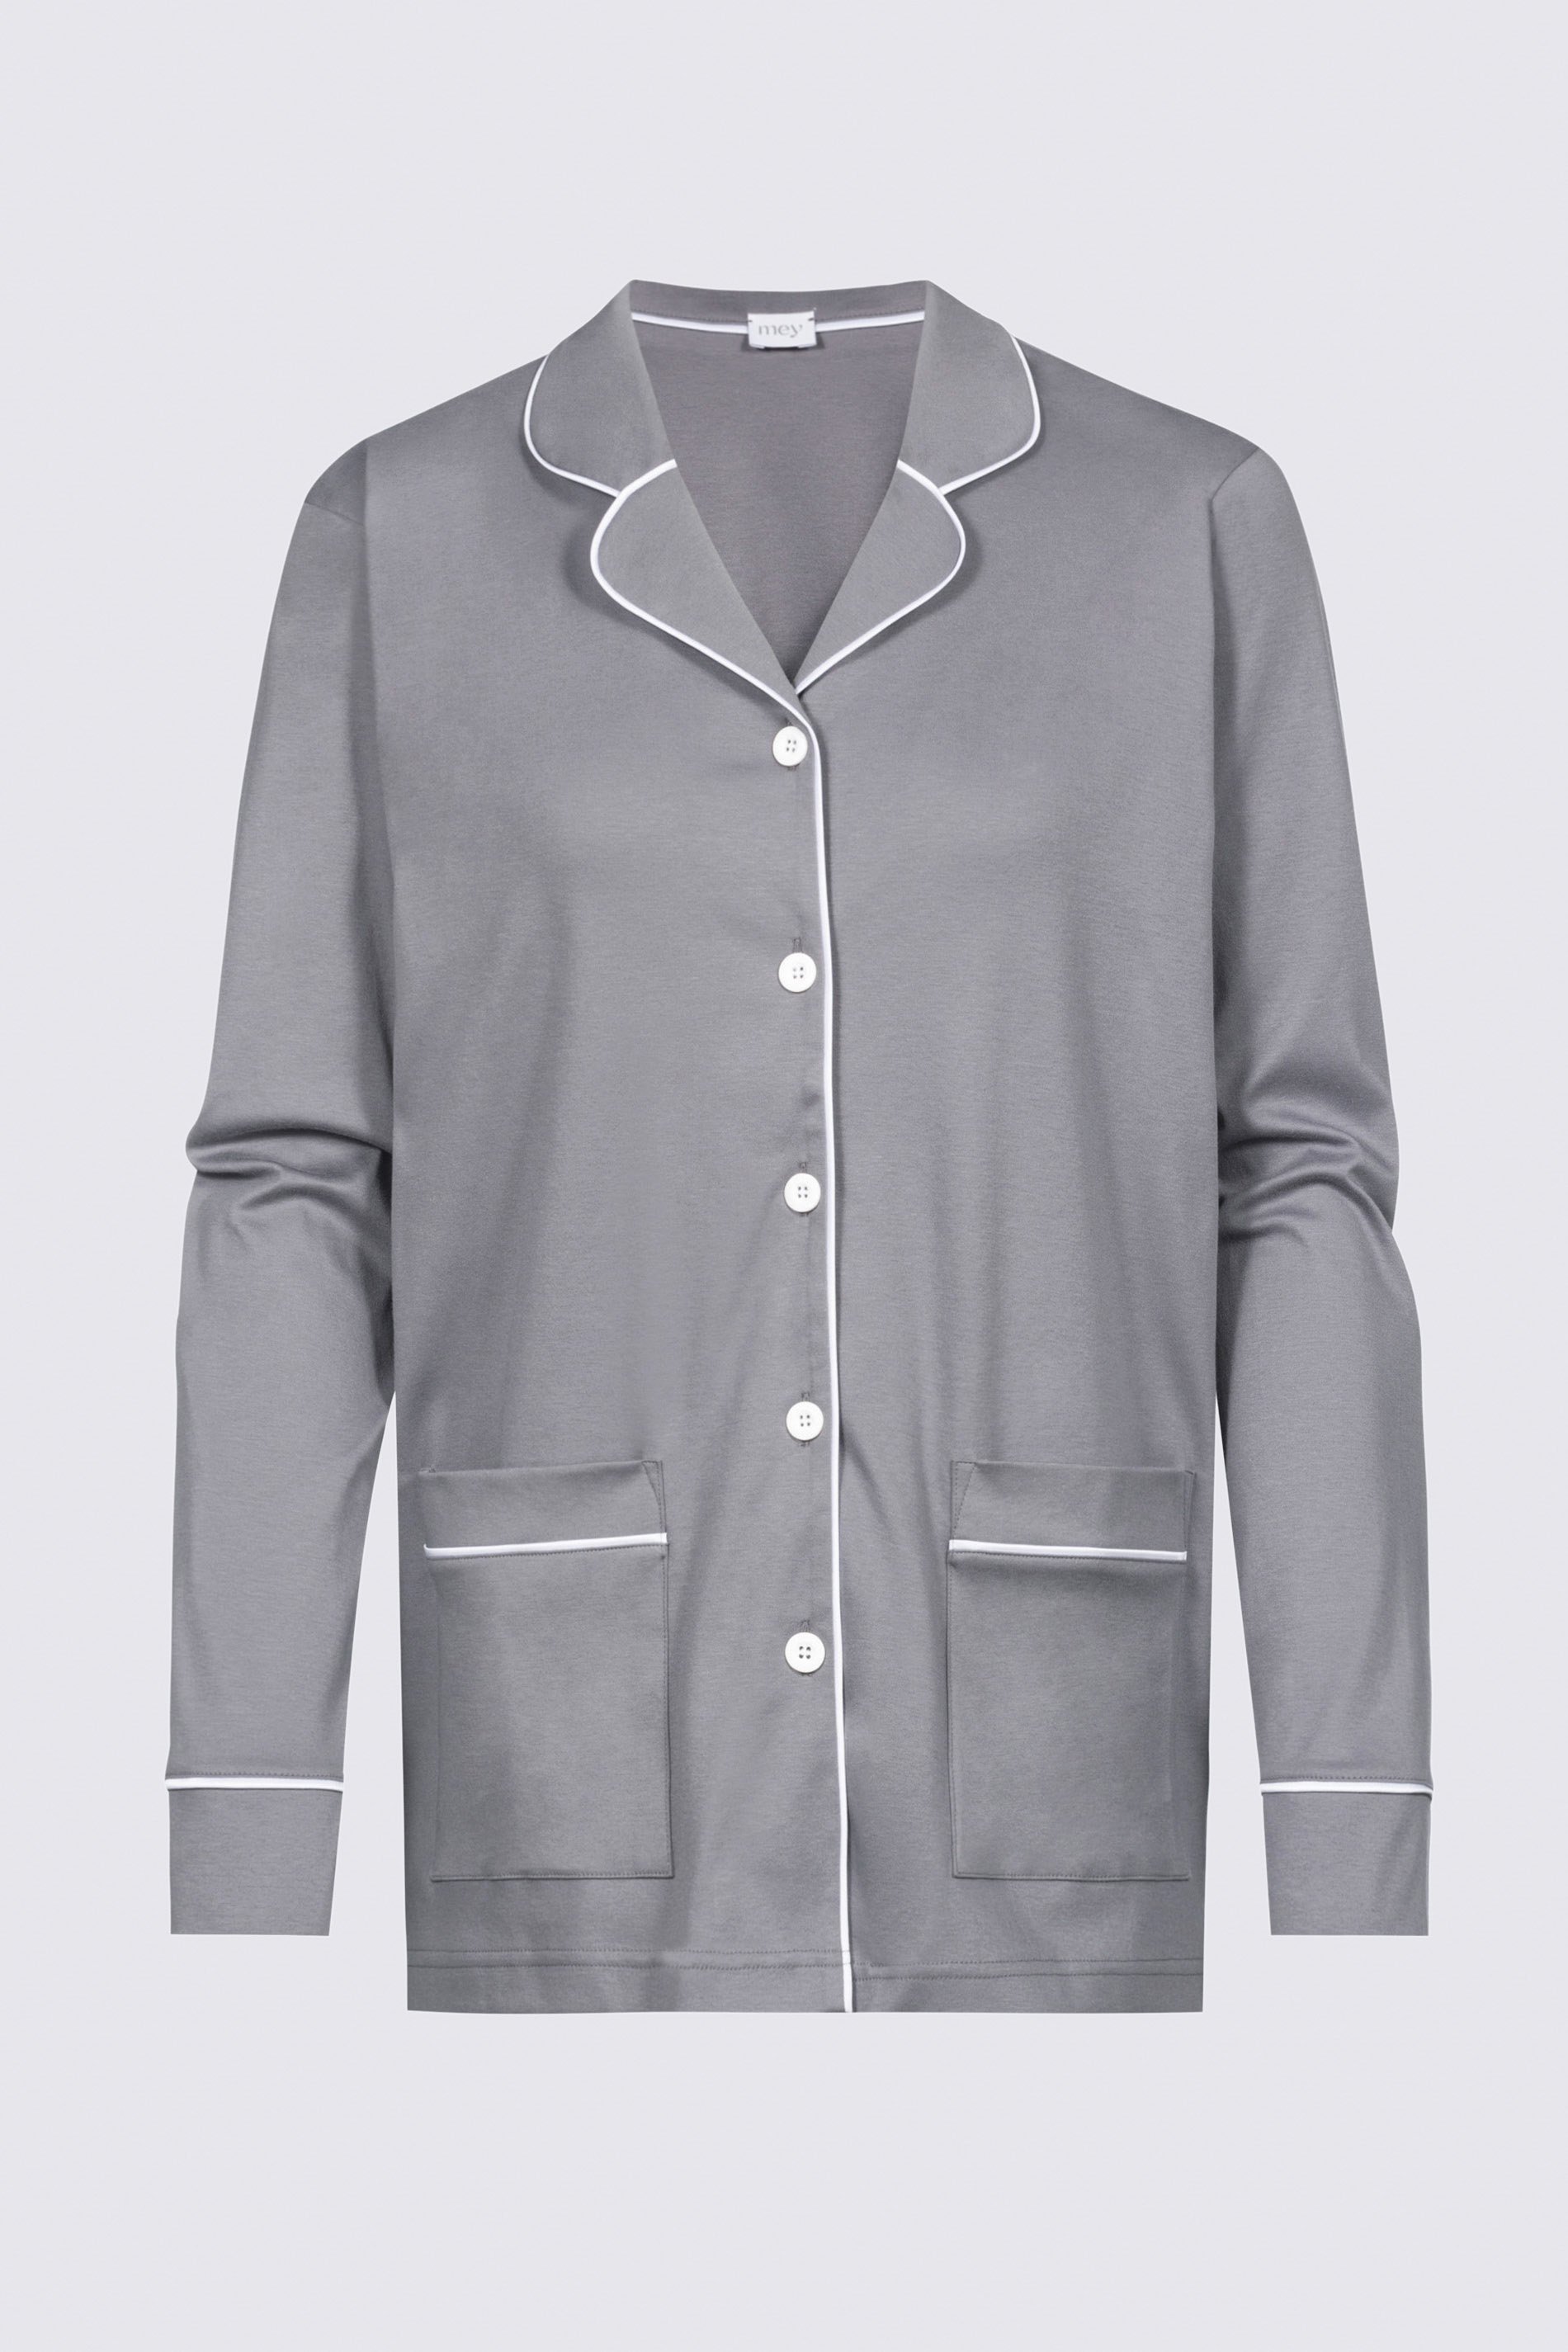 Pyjama-Shirt Lovely Grey Serie Sleepsation Freisteller | mey®